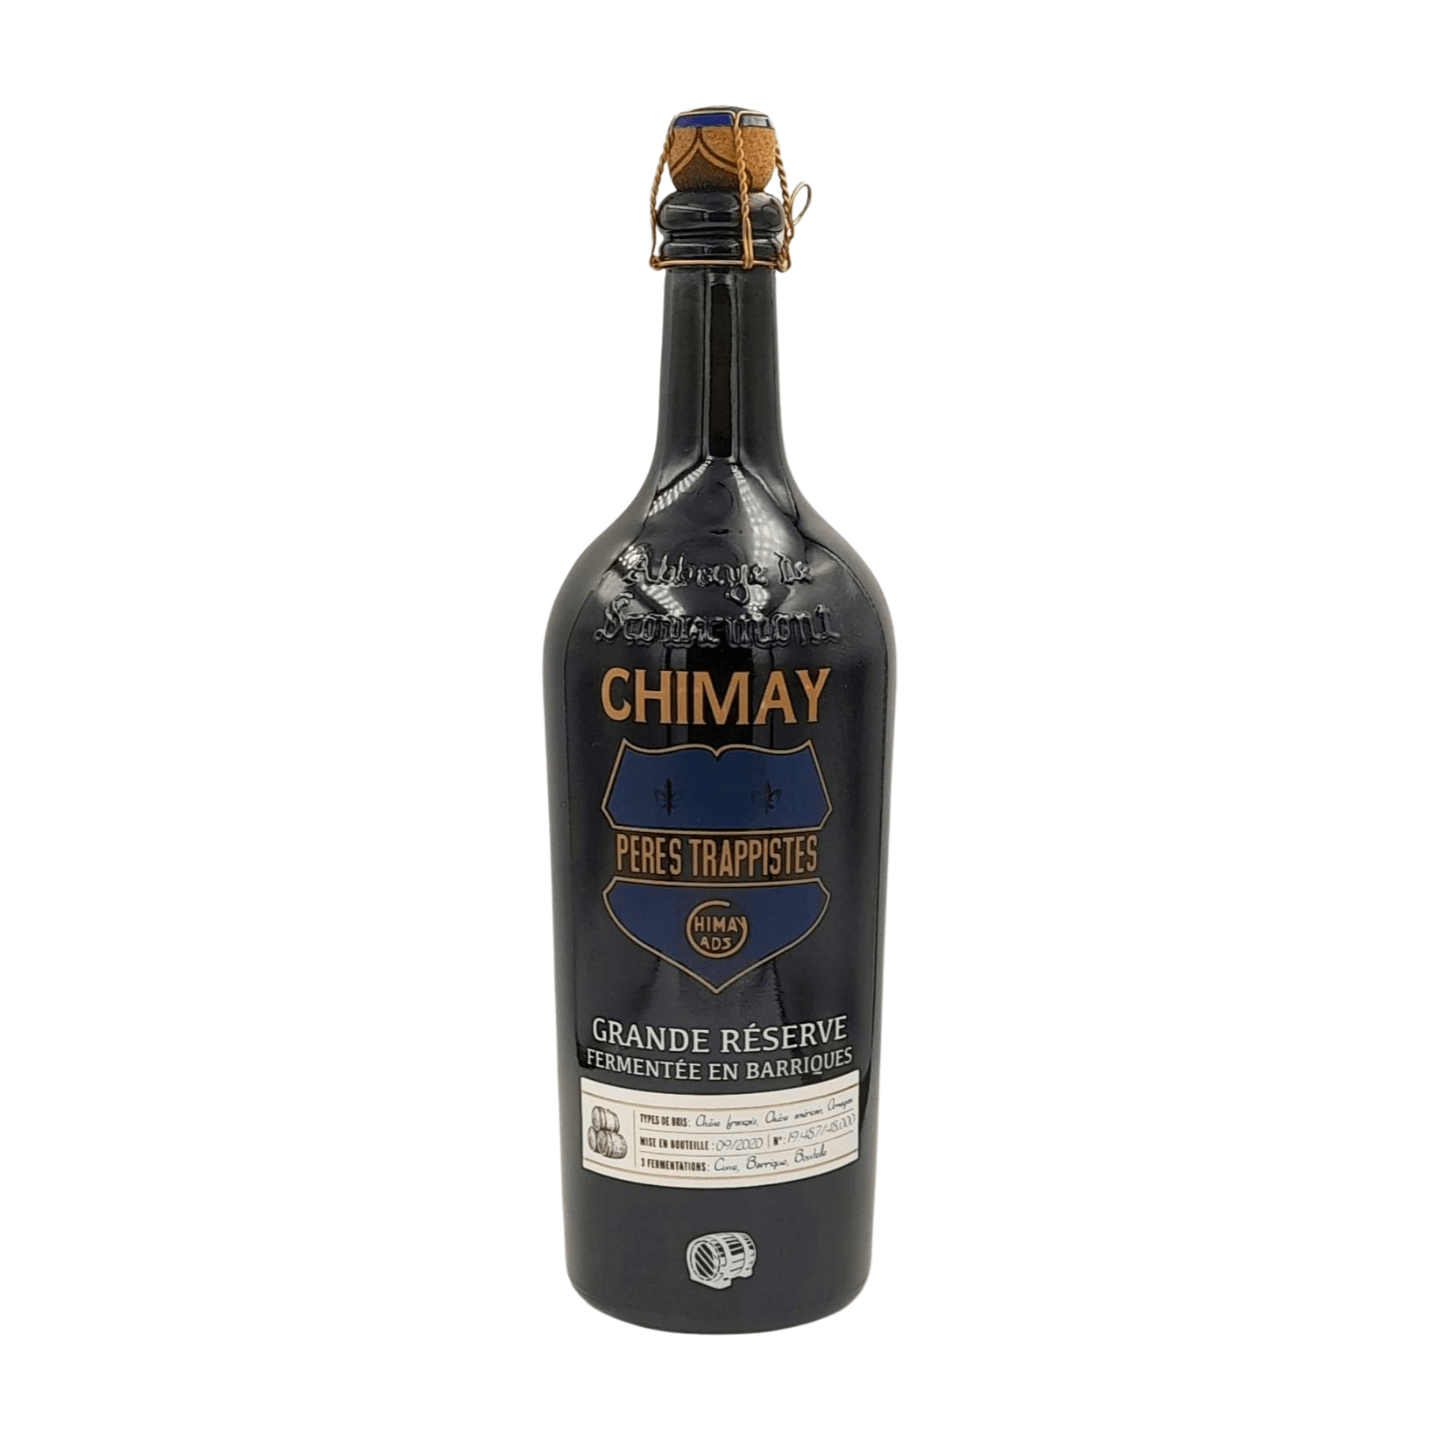 Chimay Blauw BA Armagnac 2020 | Barrel Aged Dark Ale Webshop Online Verdins Rotterdam